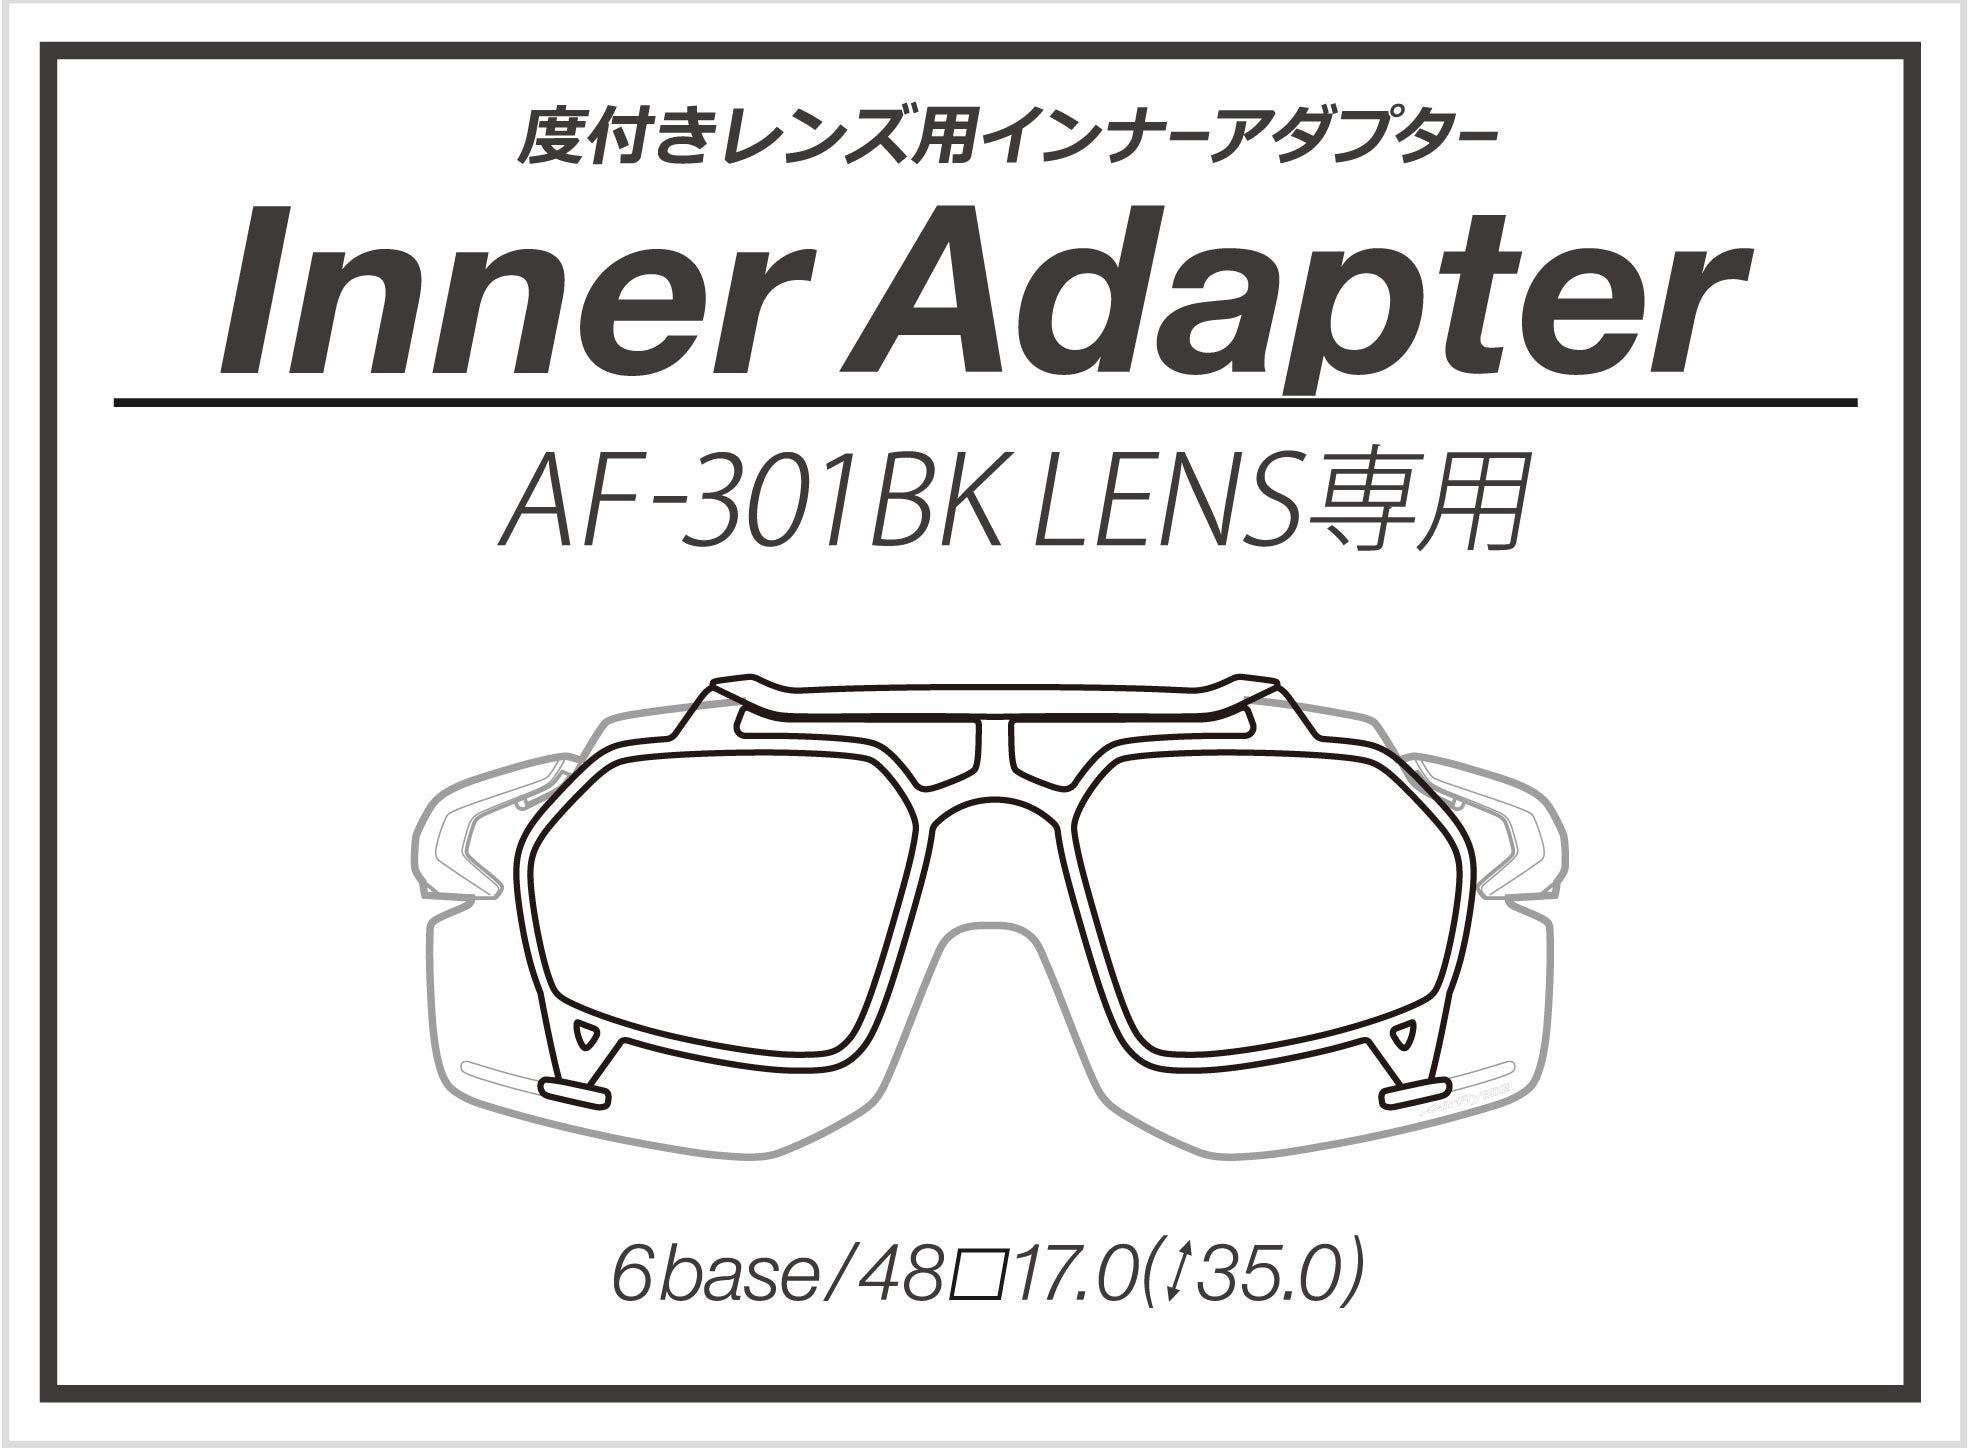 AirFly -AF301 Bike C31(Purple Gold Mirror Lens)【Pre-order Now】